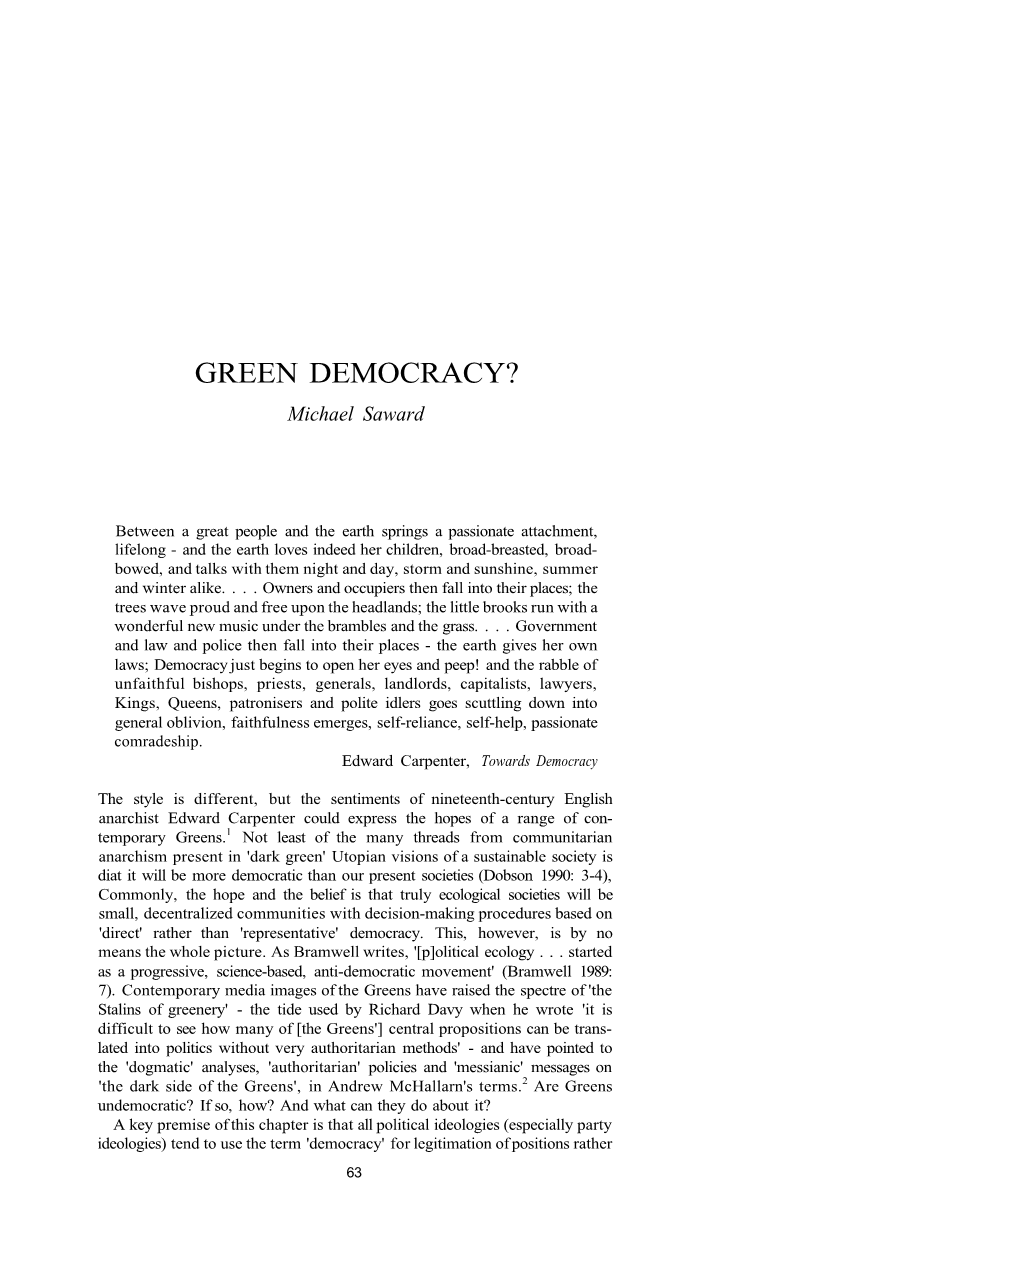 GREEN DEMOCRACY? Michael Saward